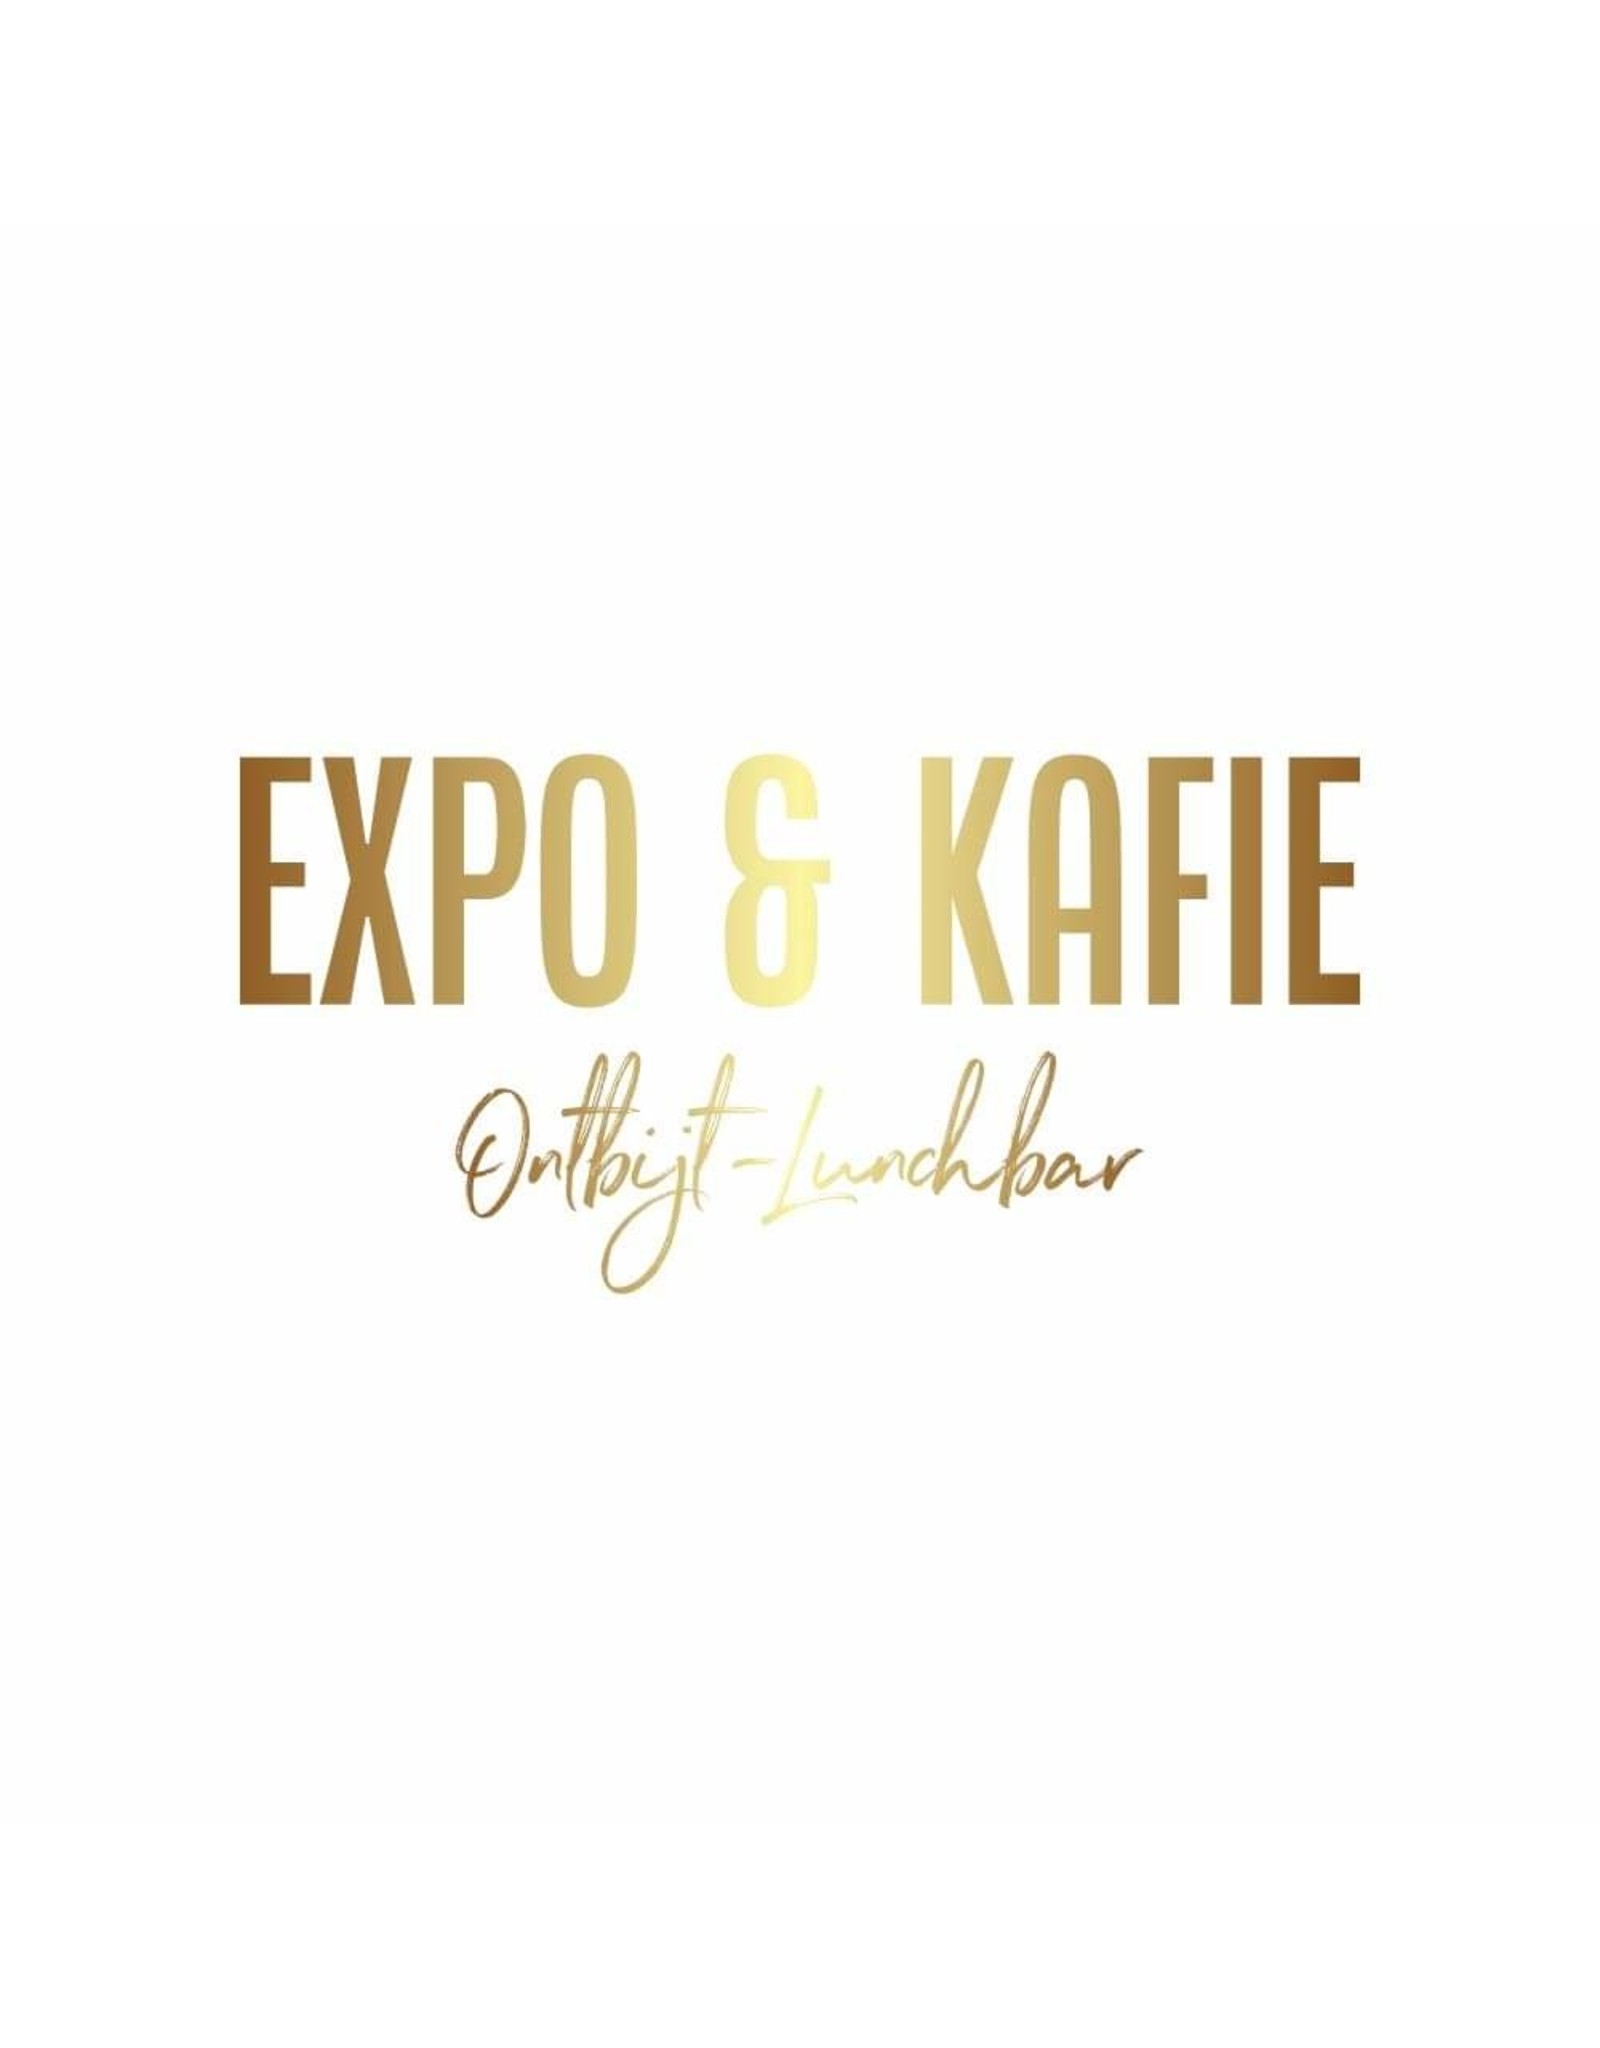 Apero box - Expo & Kafie